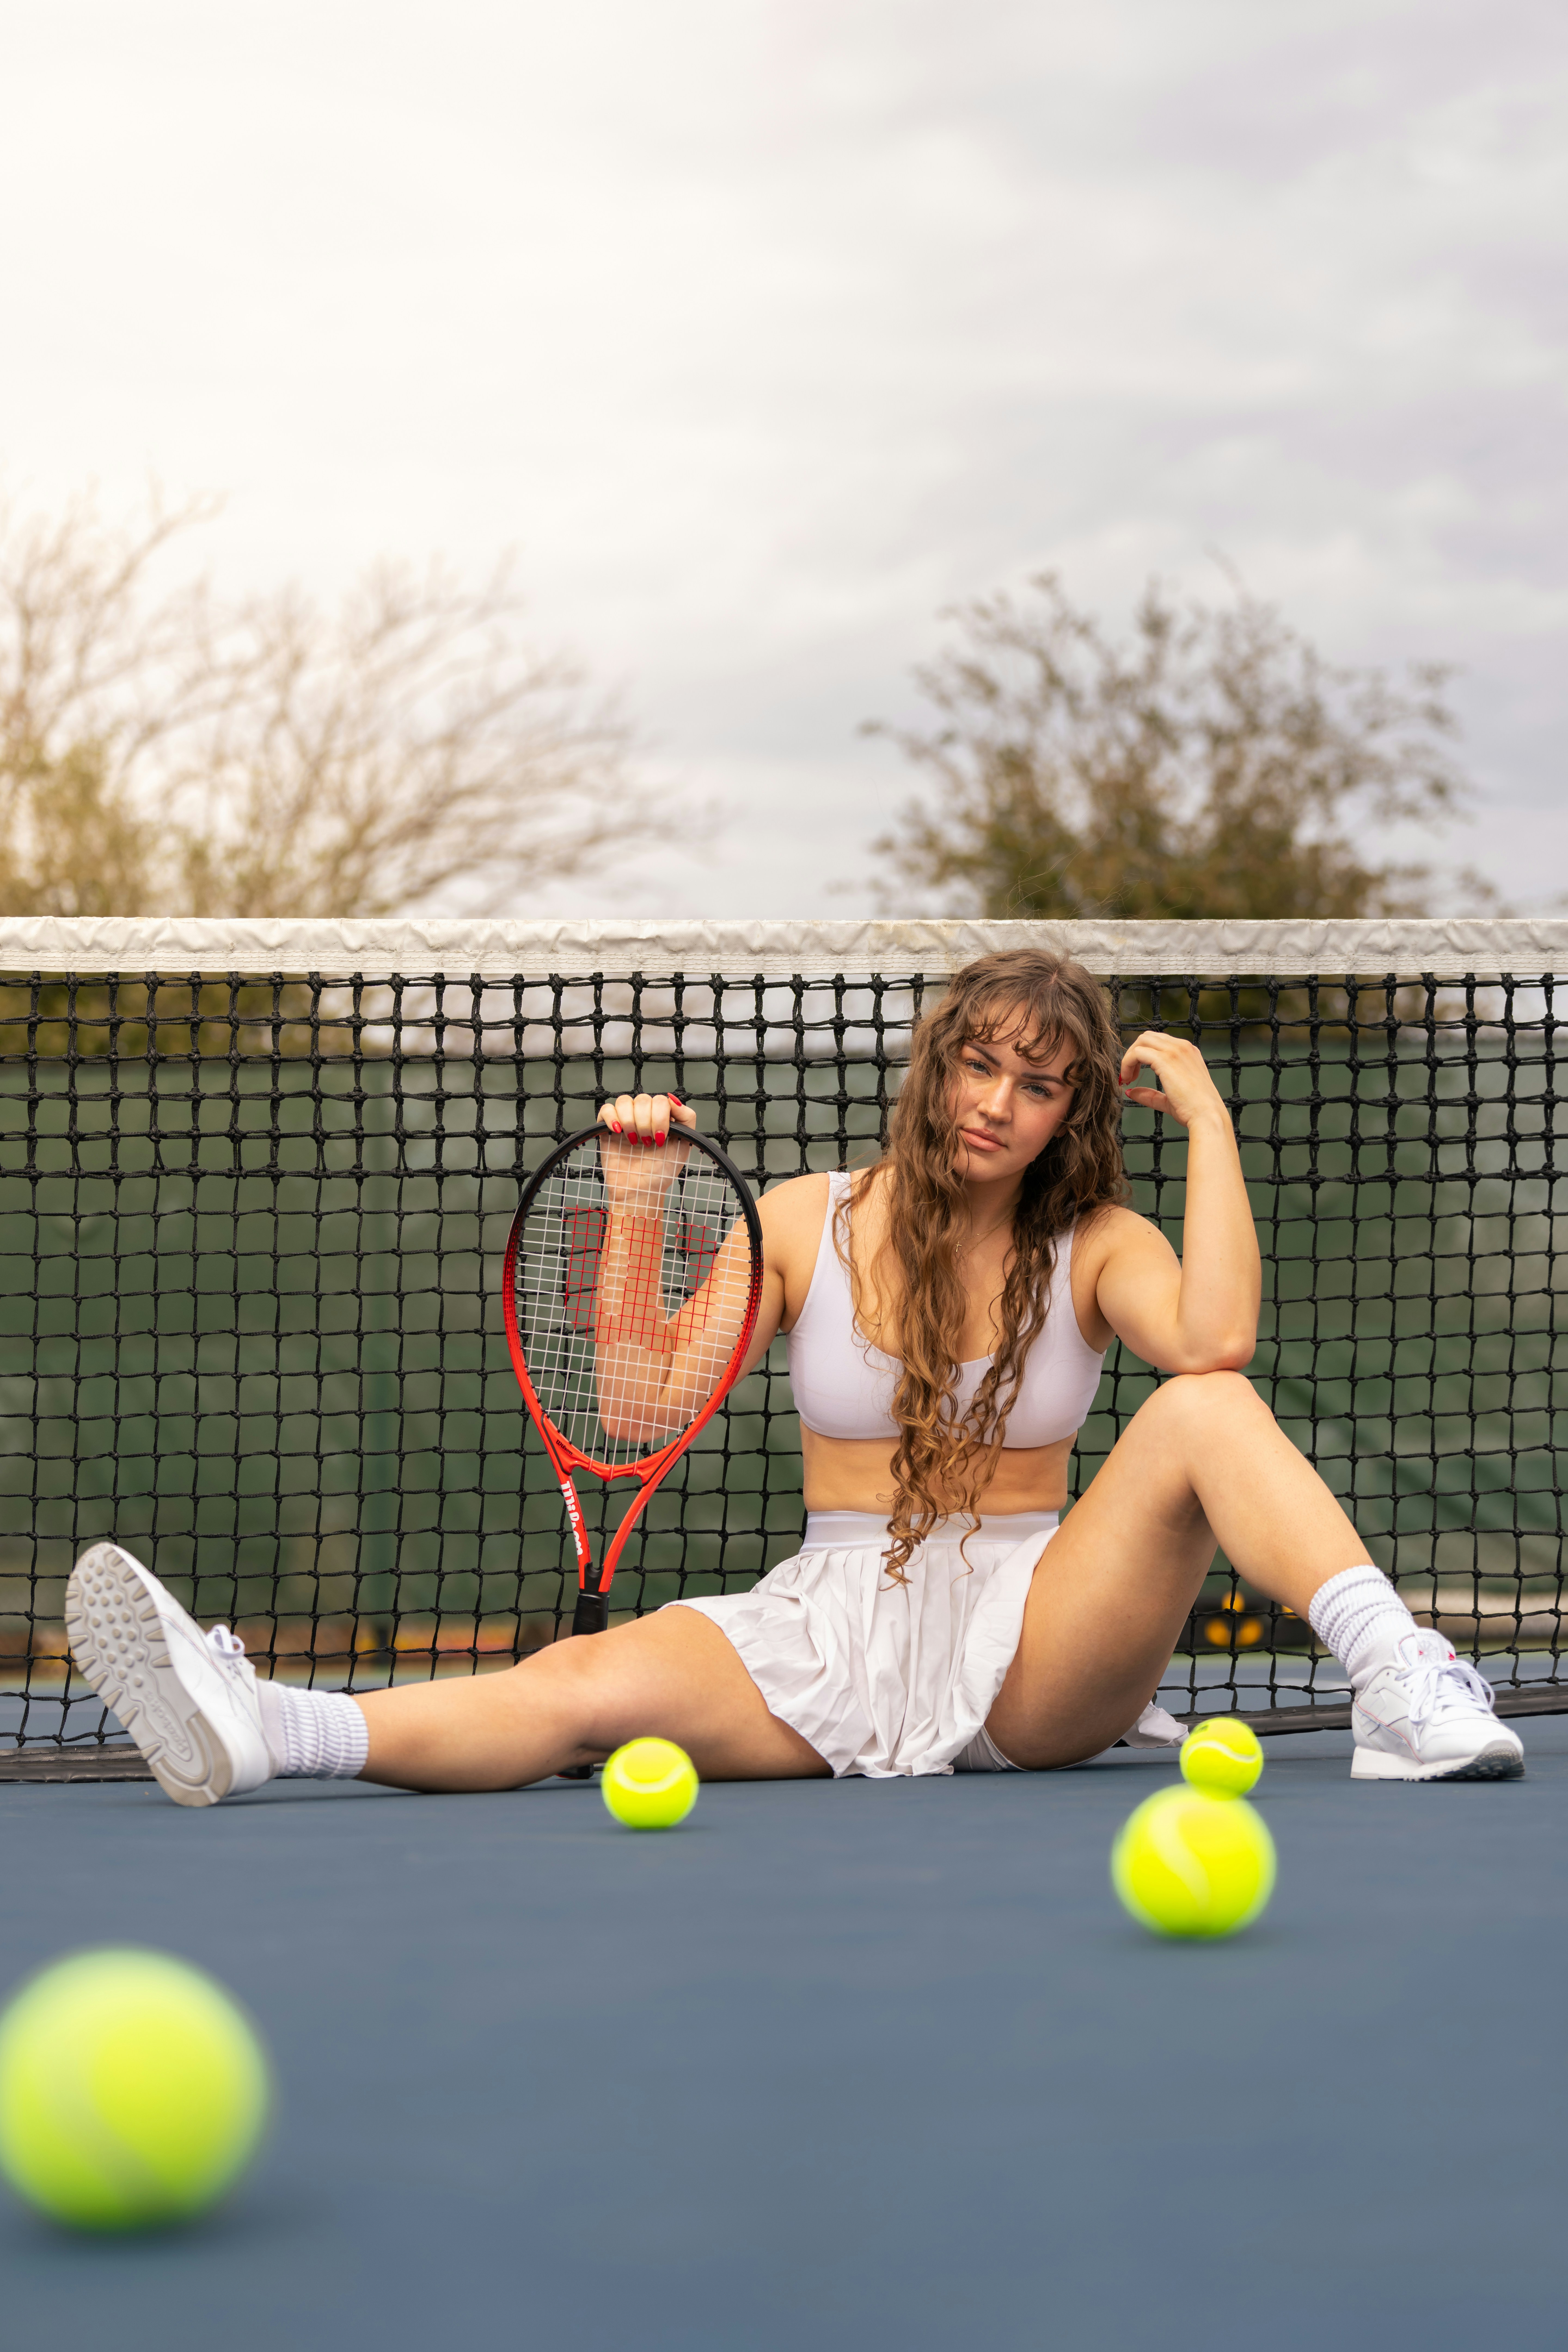 Tennis Court Photoshoot videos hdd